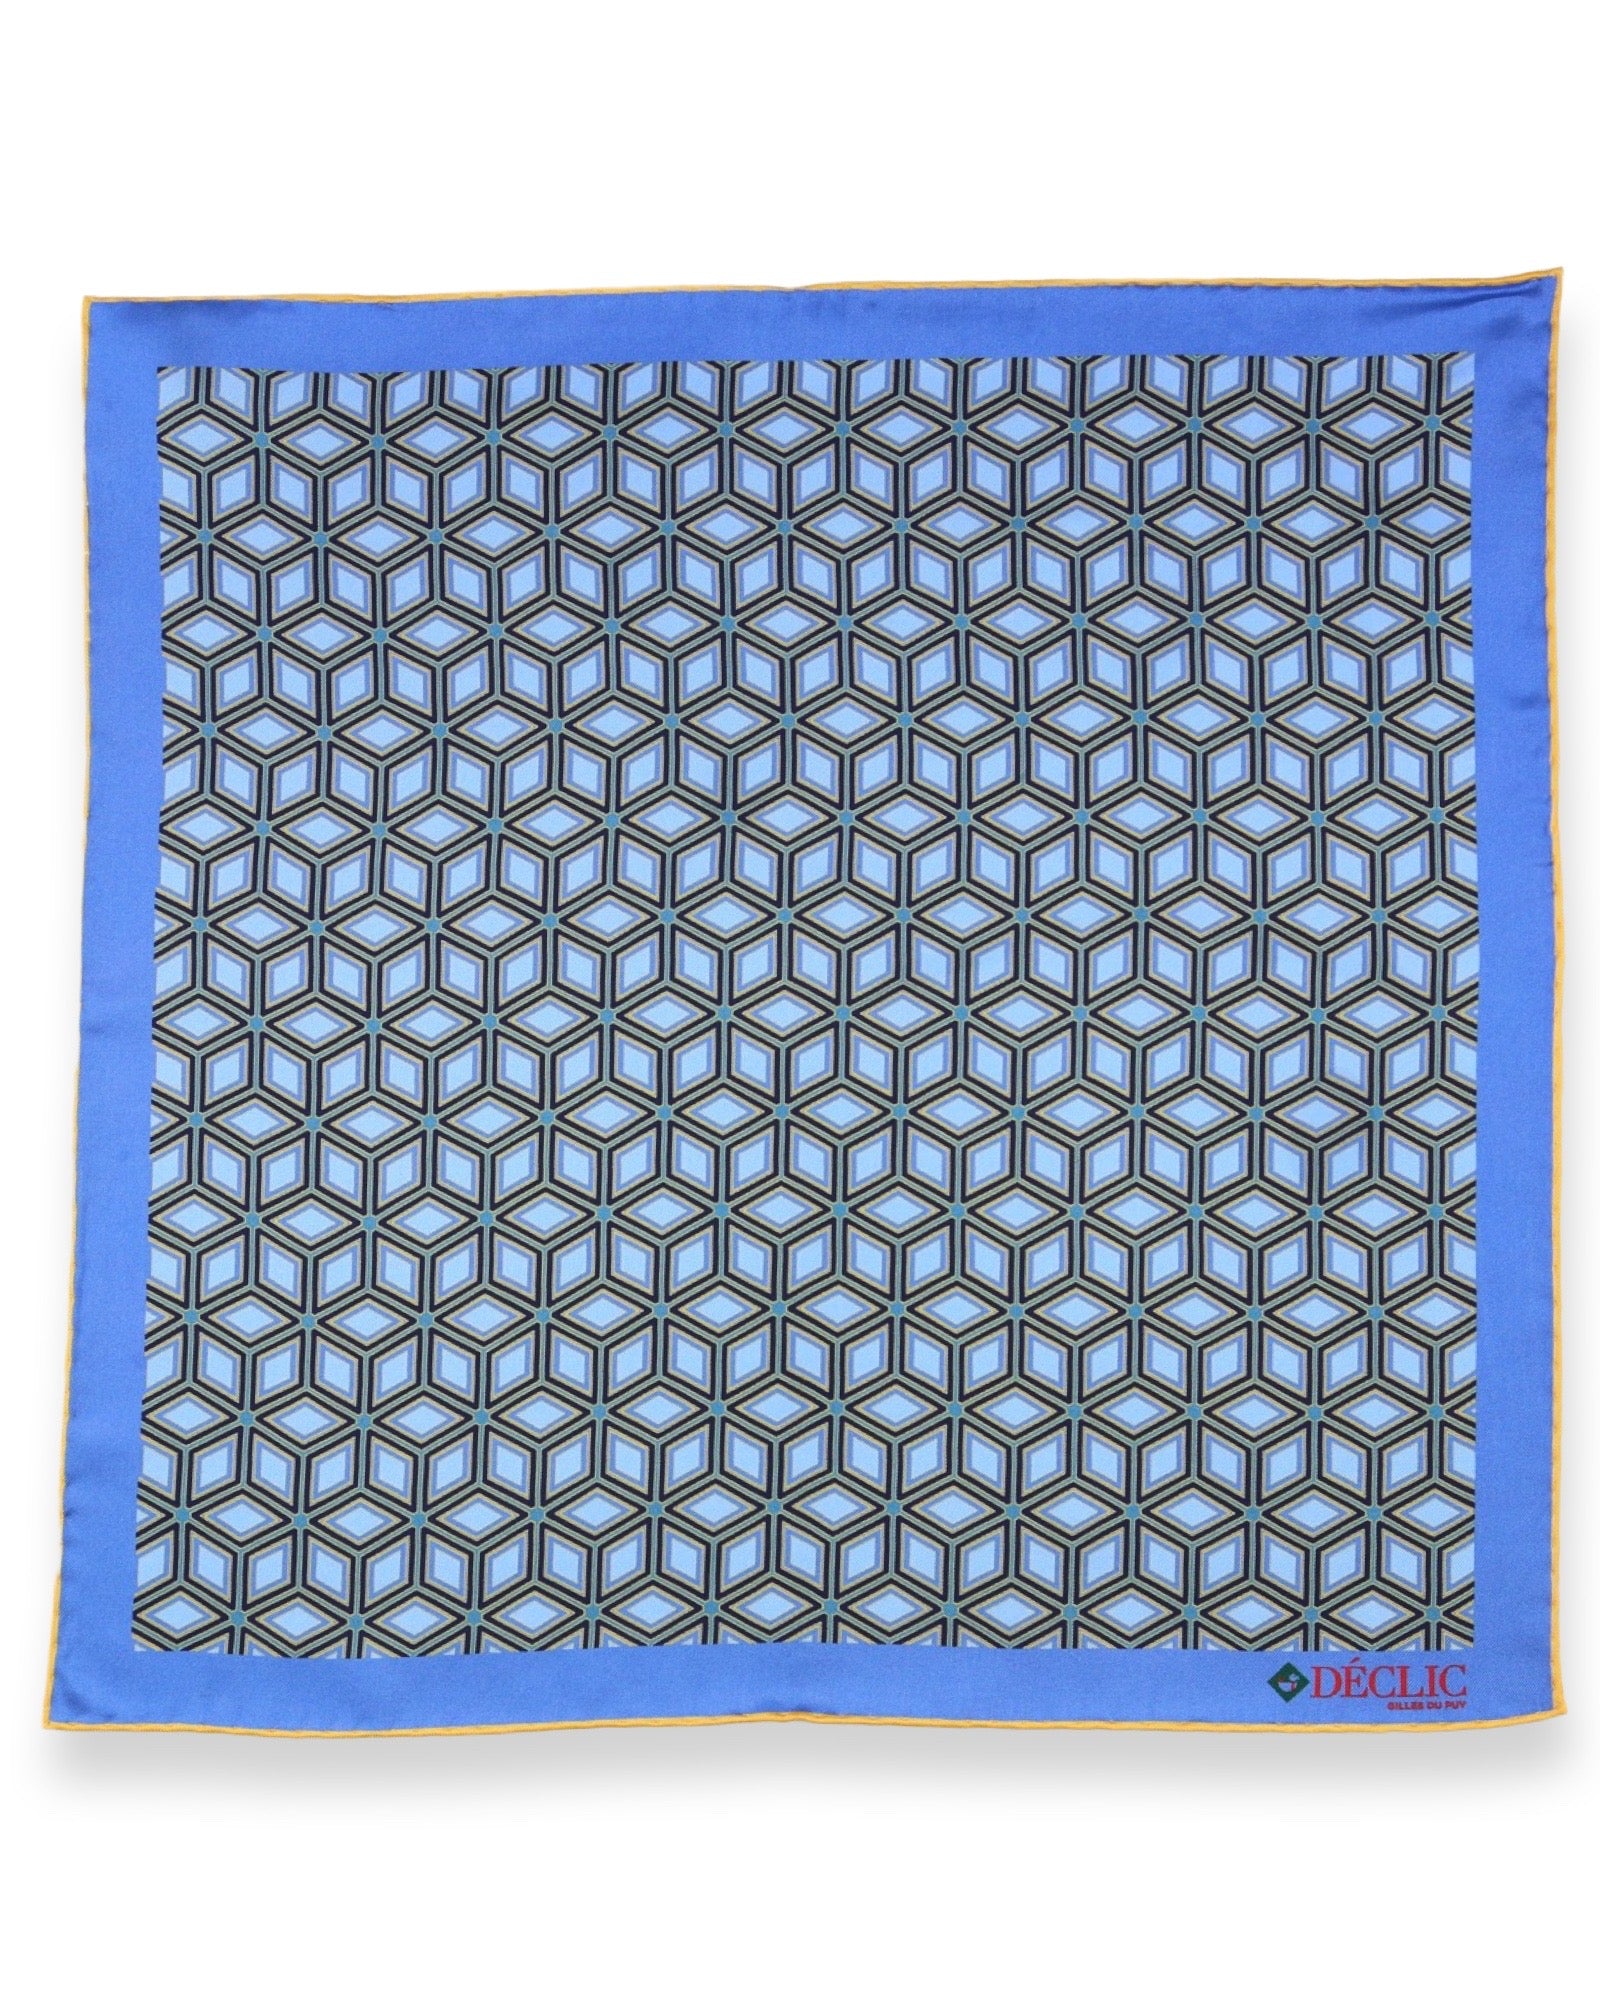 DÉCLIC Kubed Pattern Pocket Square - Blue